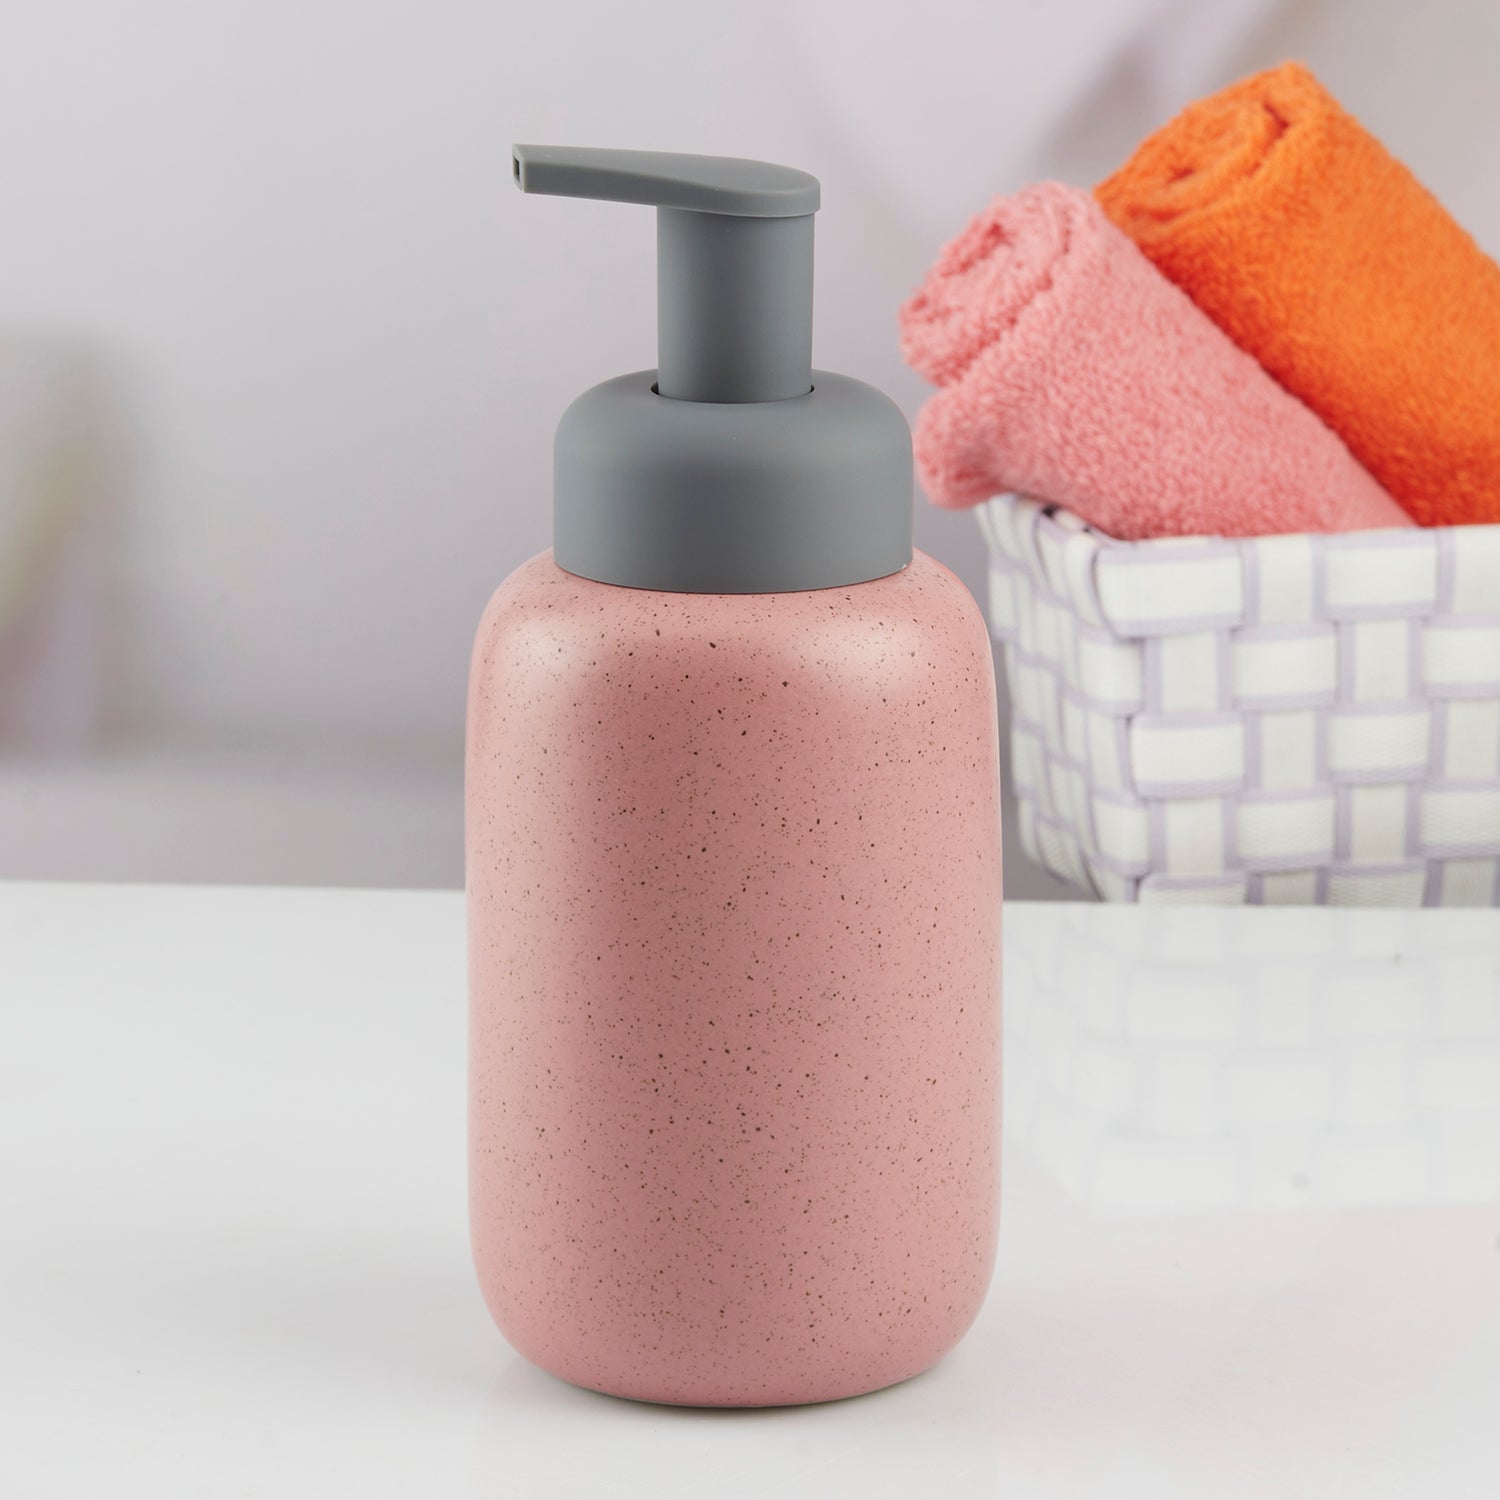 Ceramic Soap Dispenser liquid handwash pump for Bathroom, Set of 1, Pink (10733)